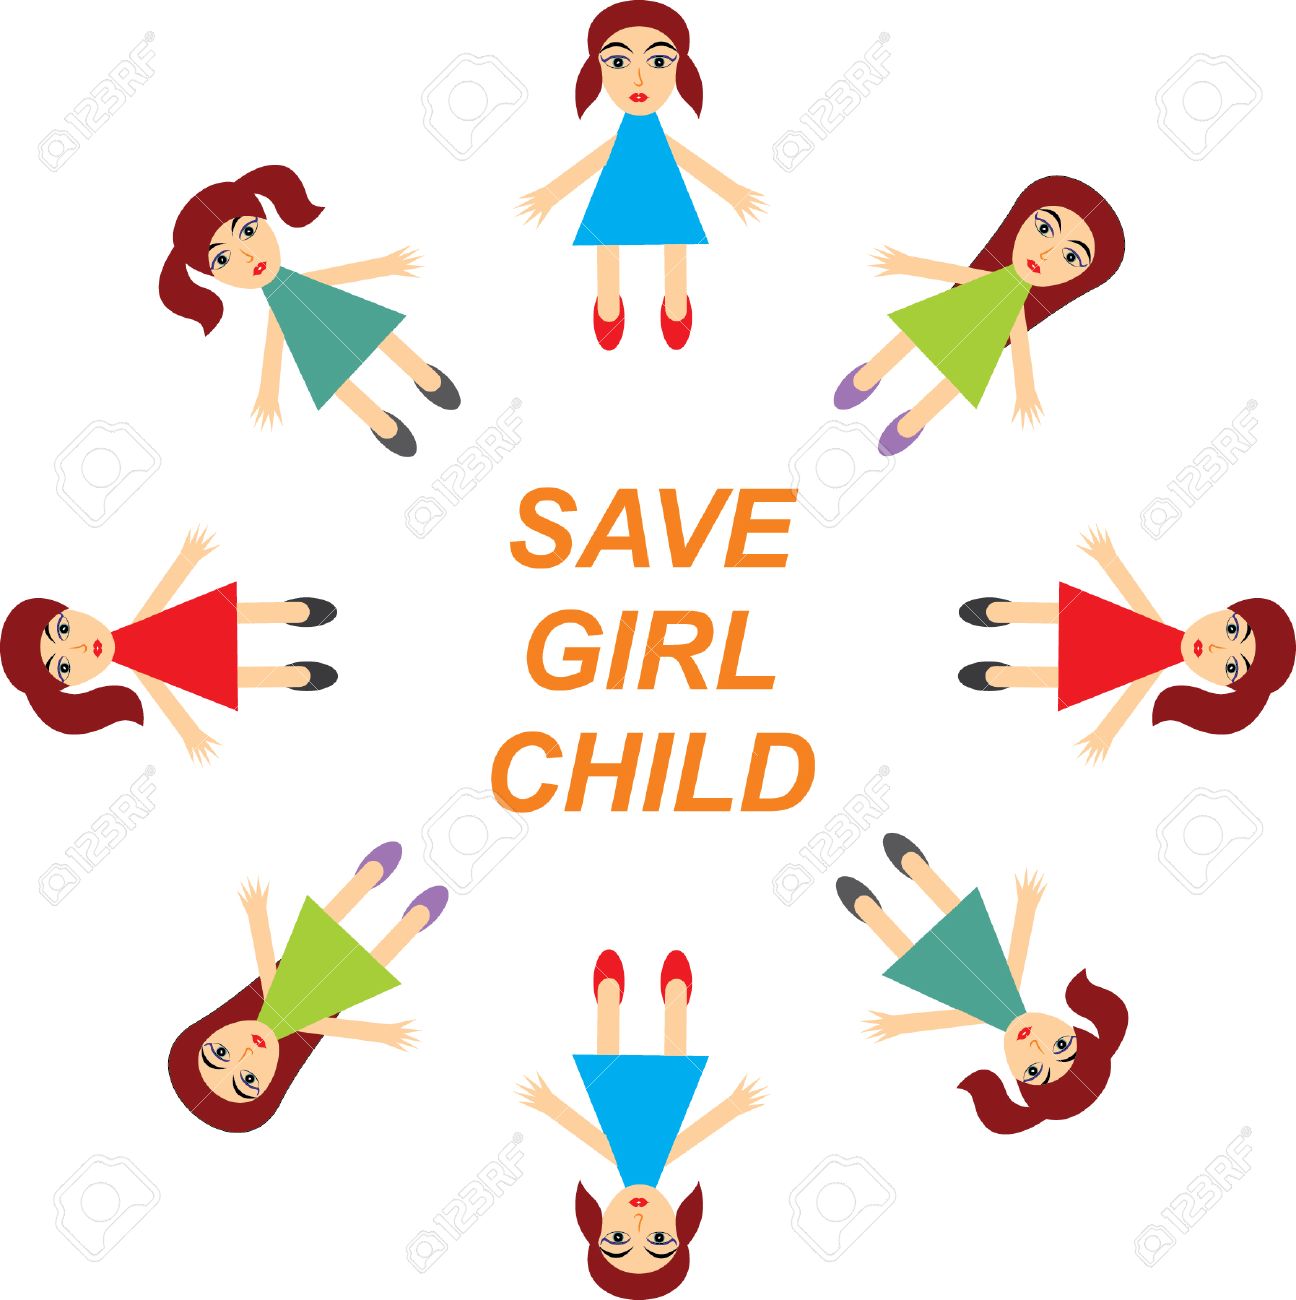 SLOGANS ON SAVE GIRL CHILD